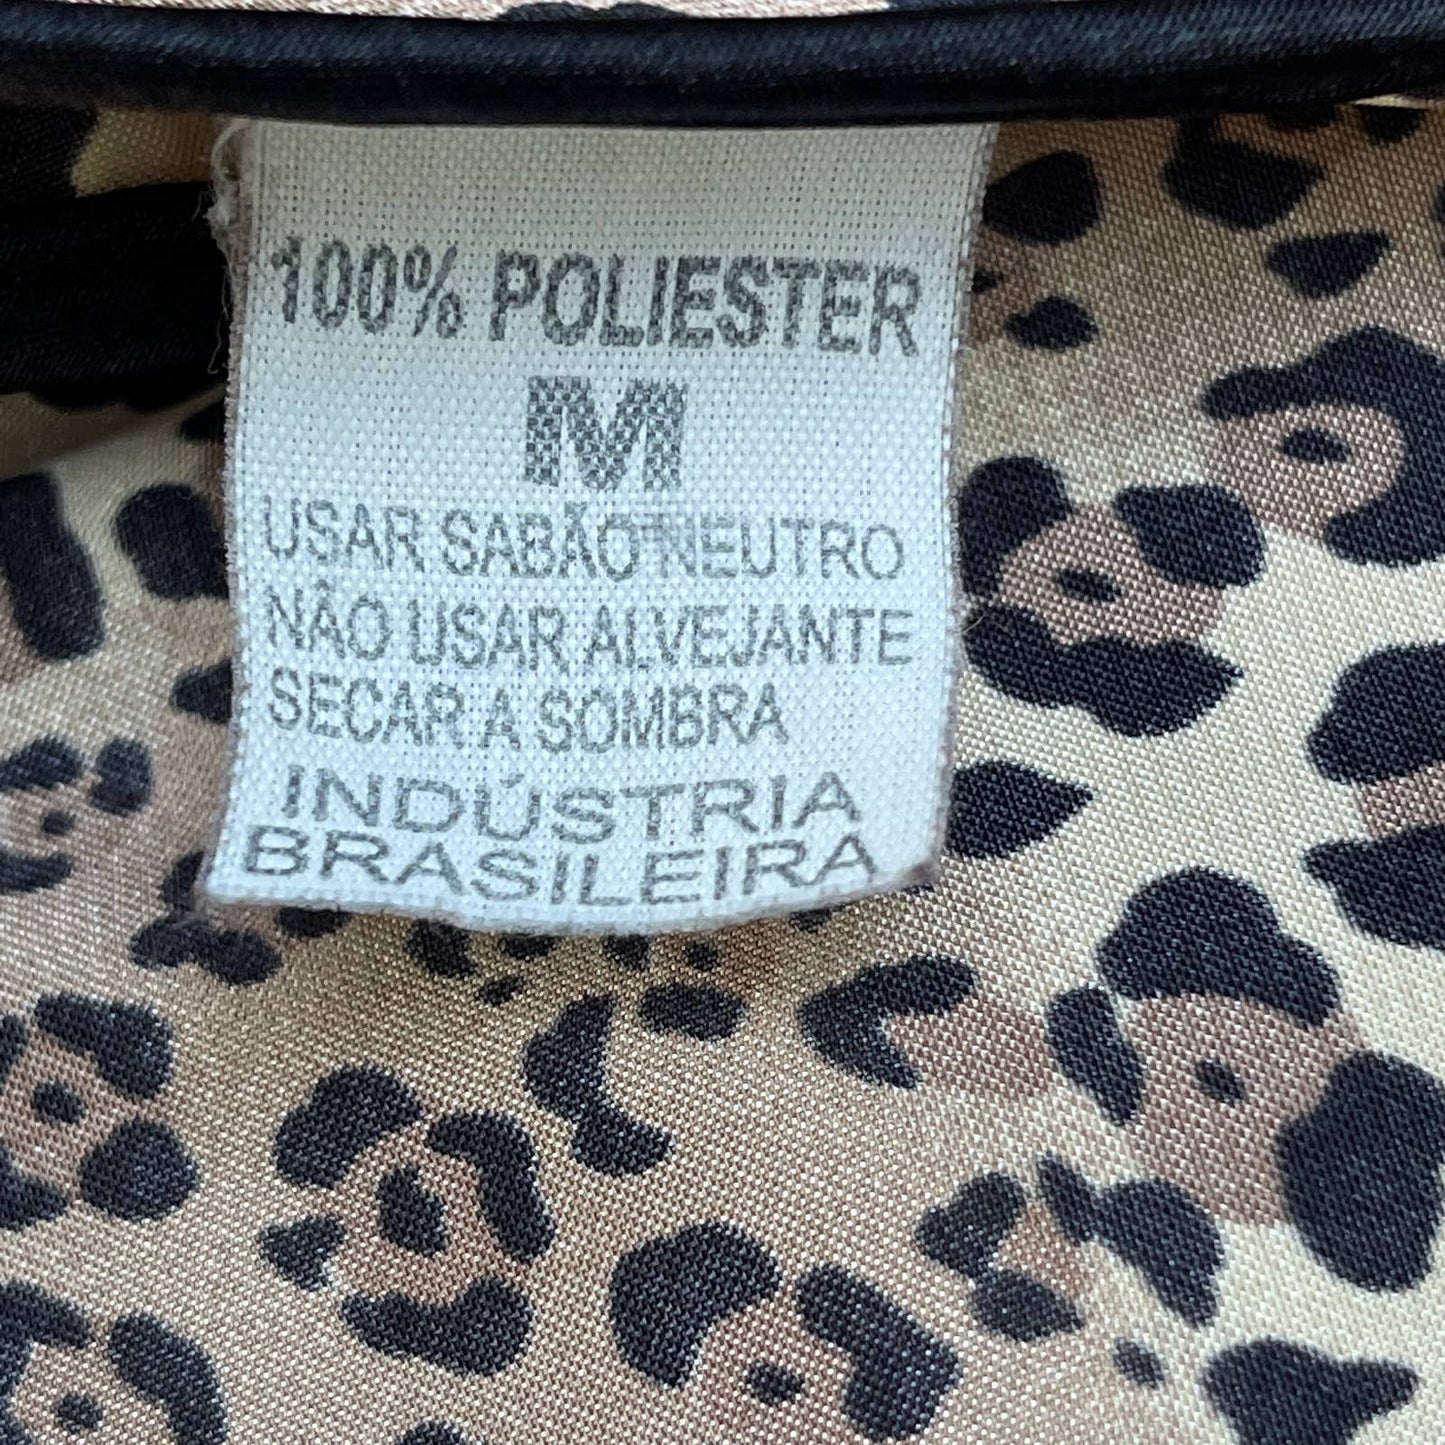 Vintage 90s Satin Leopard Print Camisole Sleeveless Cami Top Brazil Size M